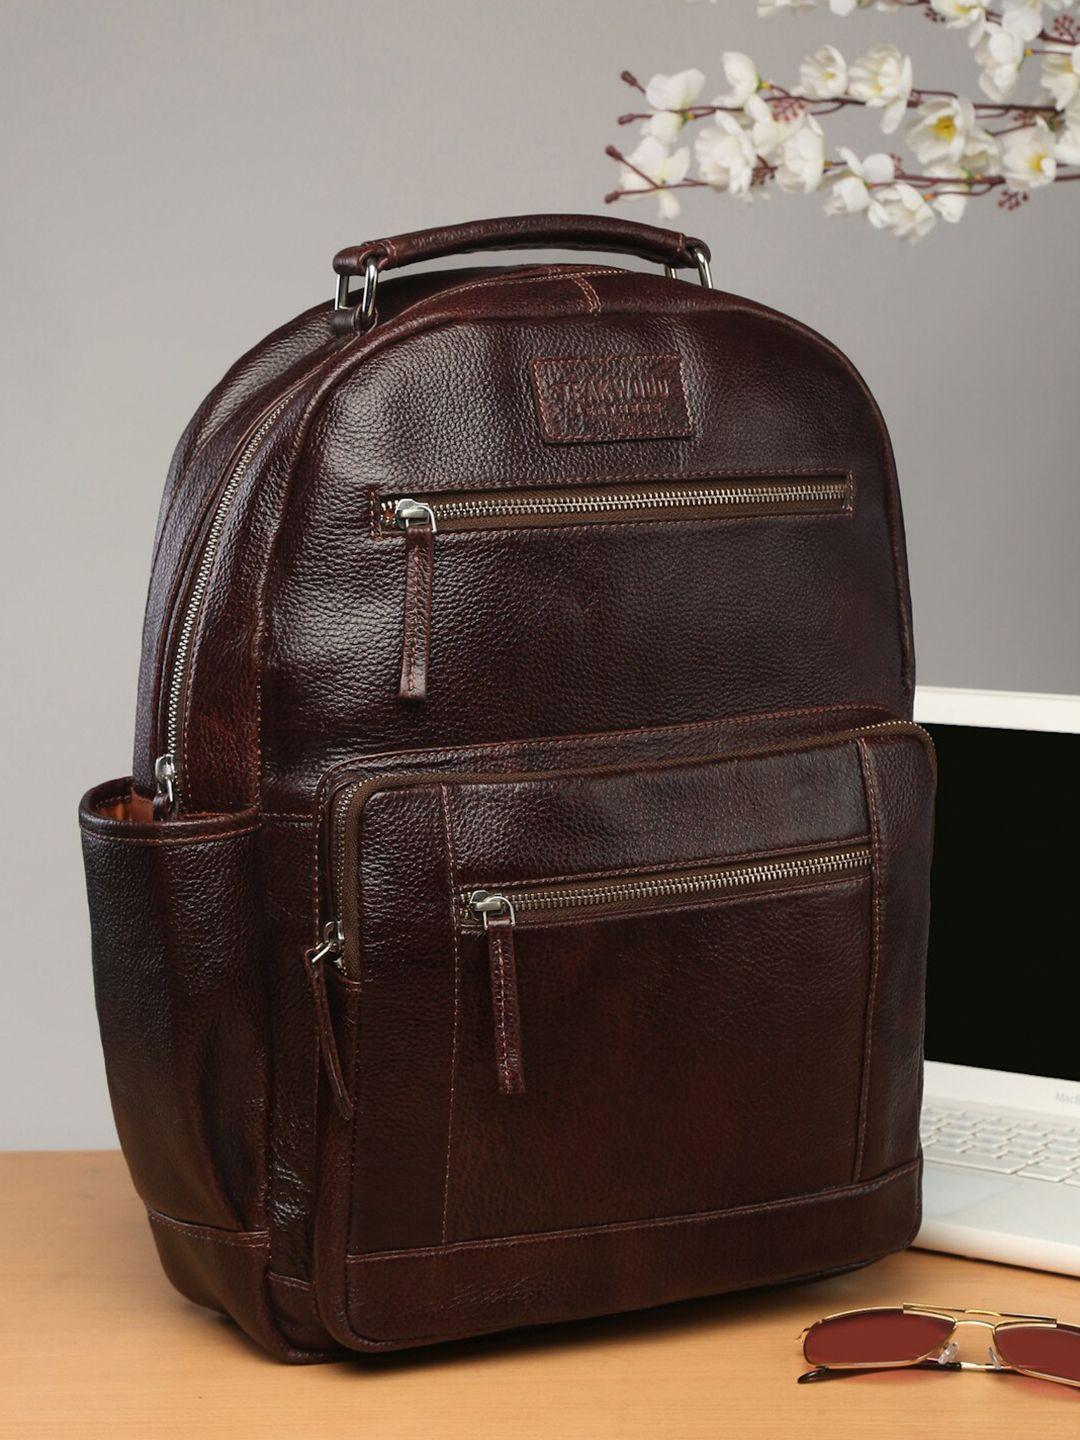 teakwood-leathers-brown-leather-backpack